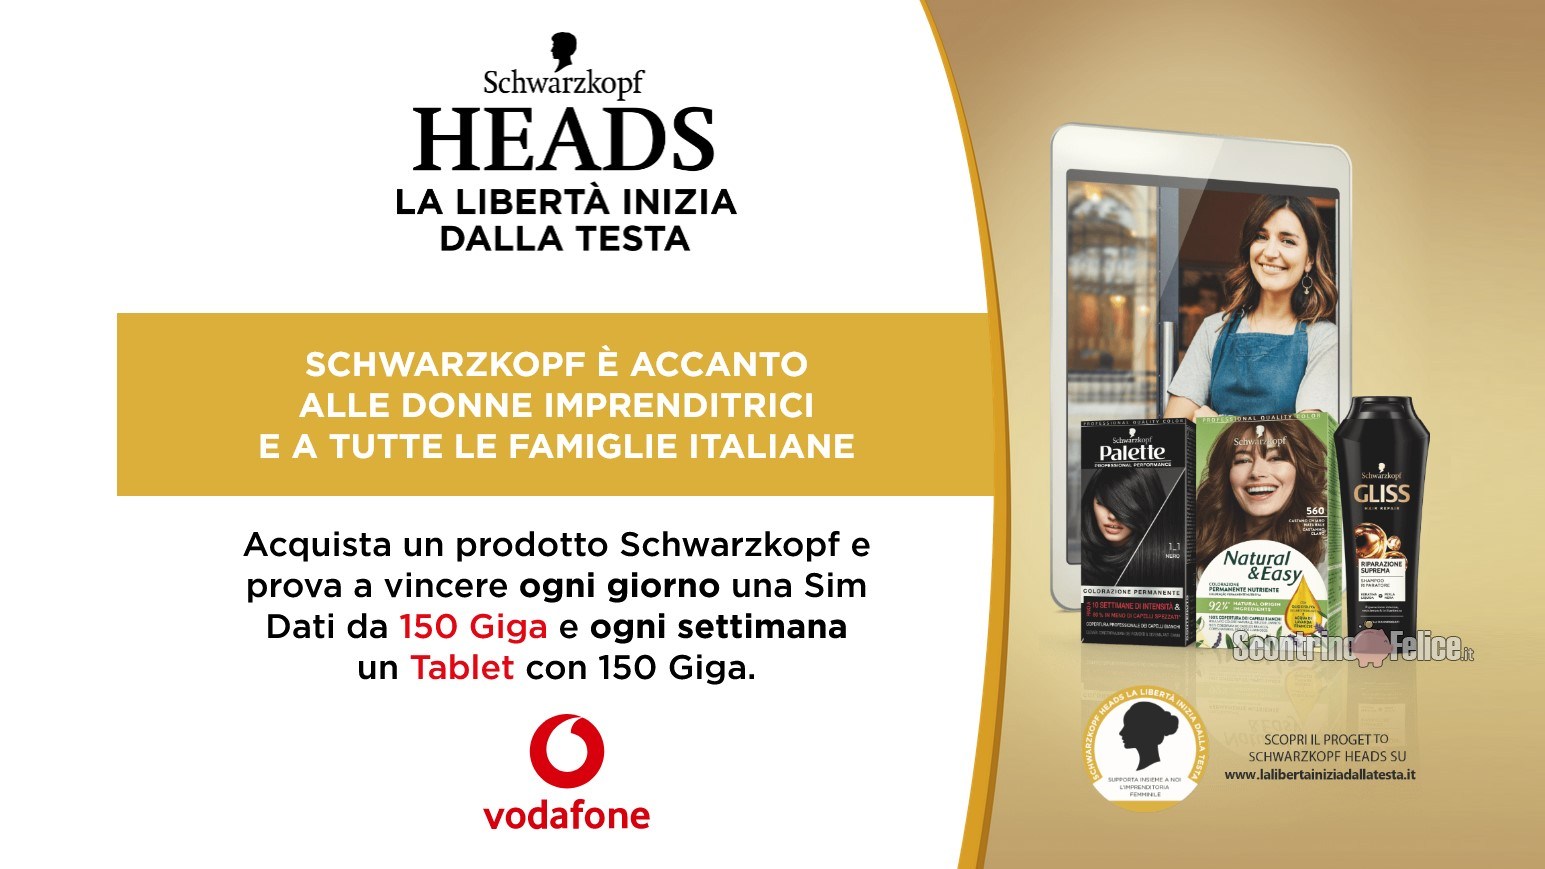 Concorso Schwarzkopf Heads vinci Sim dati Ricaricabile Vodafone e tablet Samsung S6 Light